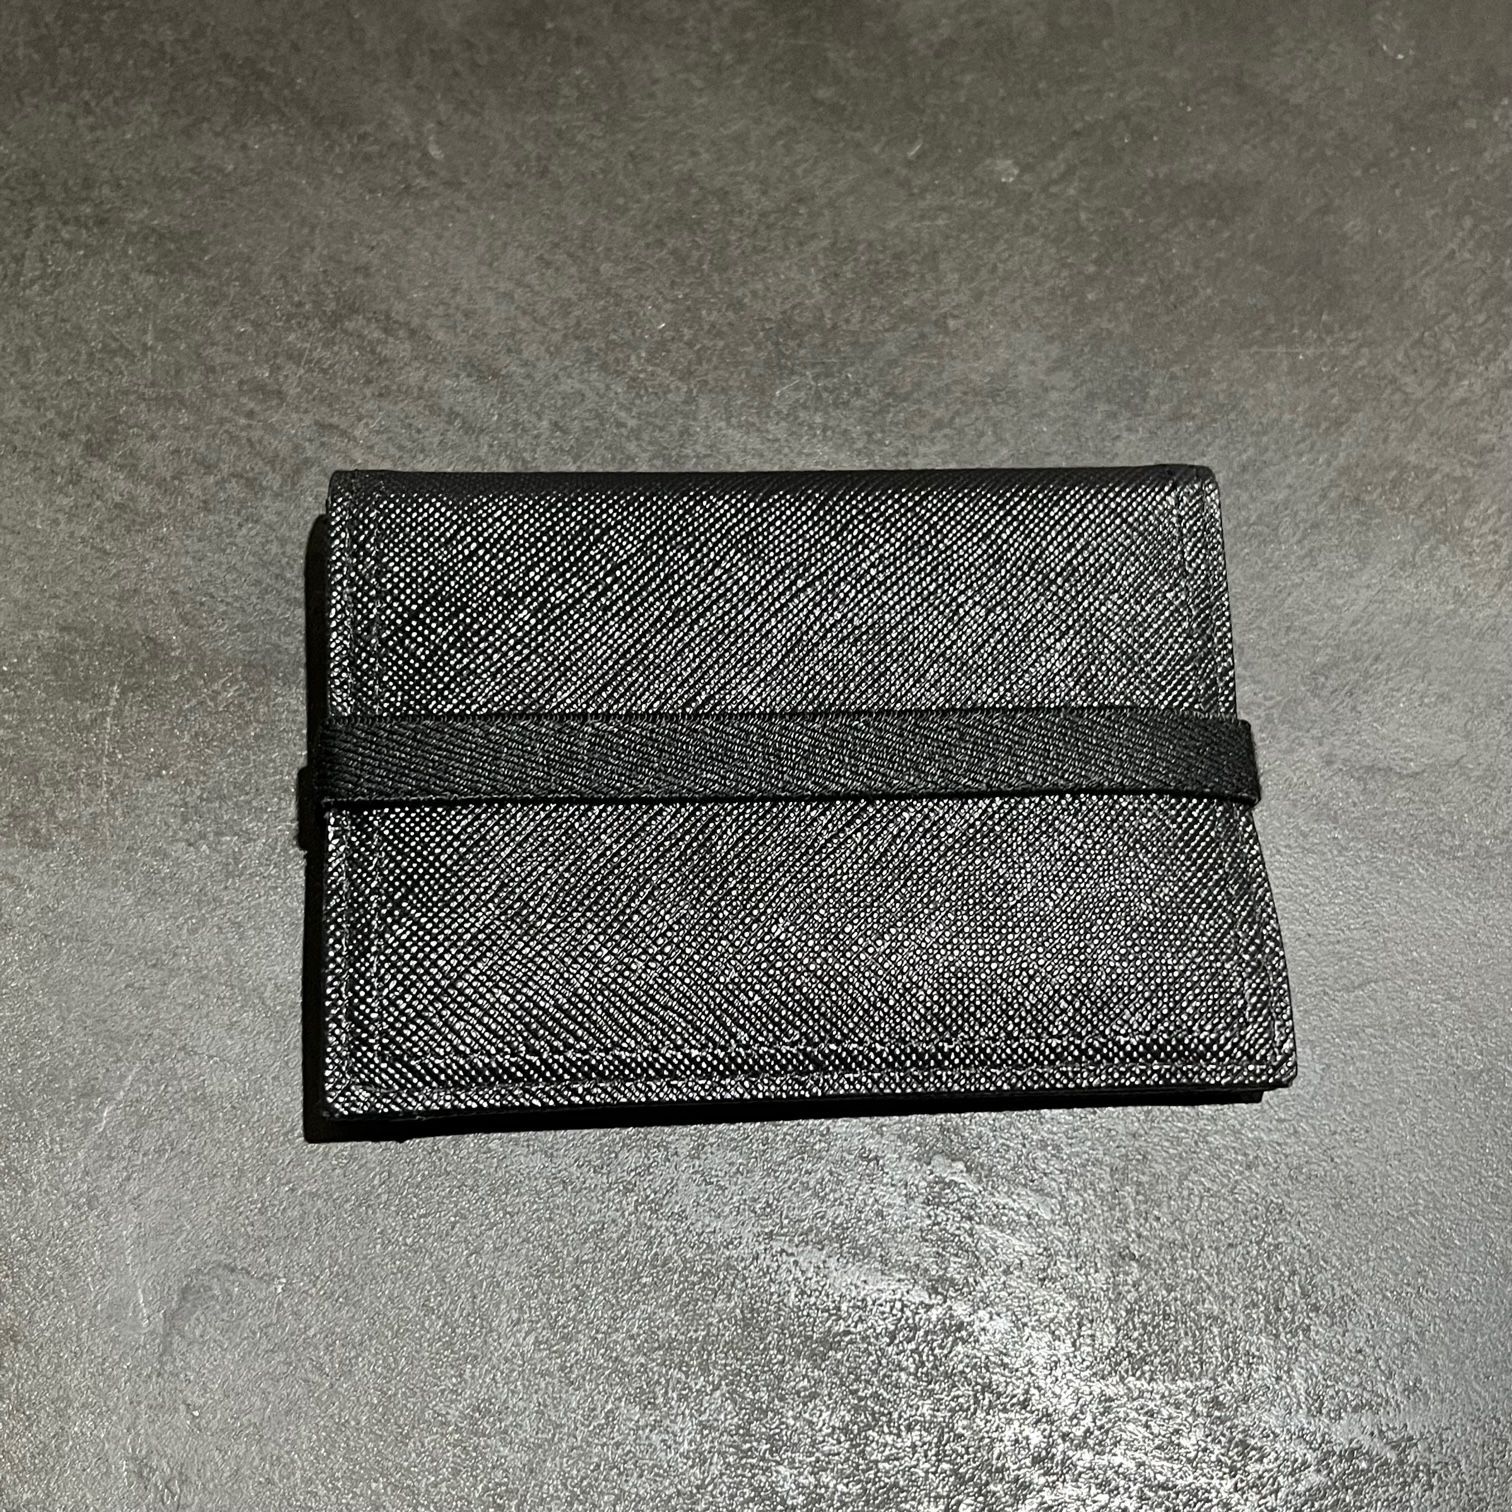 110x80mmArtist proof ramidus band mini wallet 新品